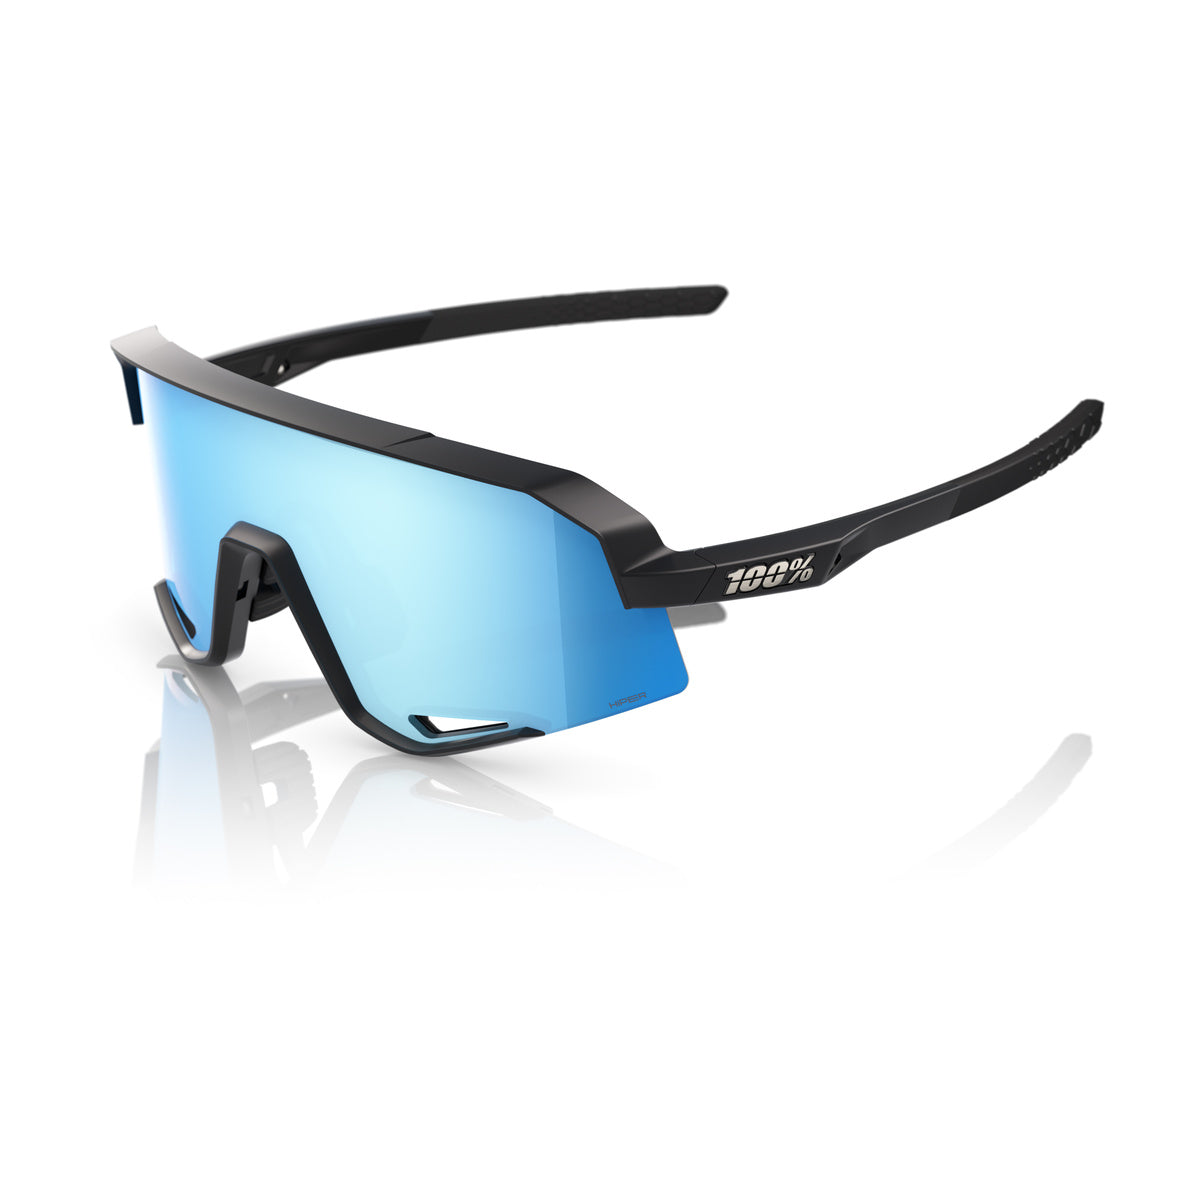 100 Percent Slendale Sunglasses - One Size Fits Most - Matte Black - HiPER Blue Mirror Lens